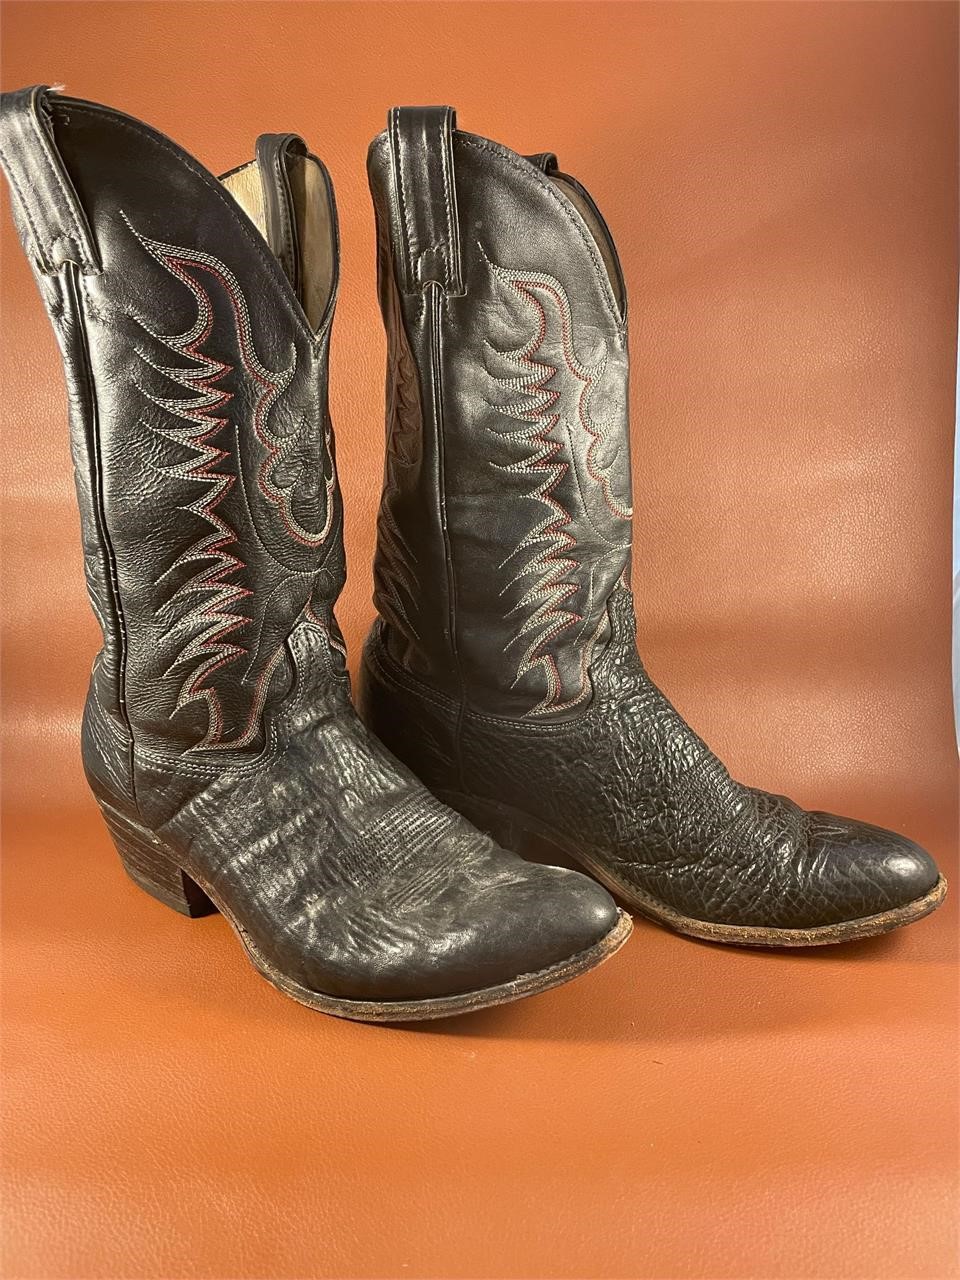 Abilene Men's Leather Boots 11 D